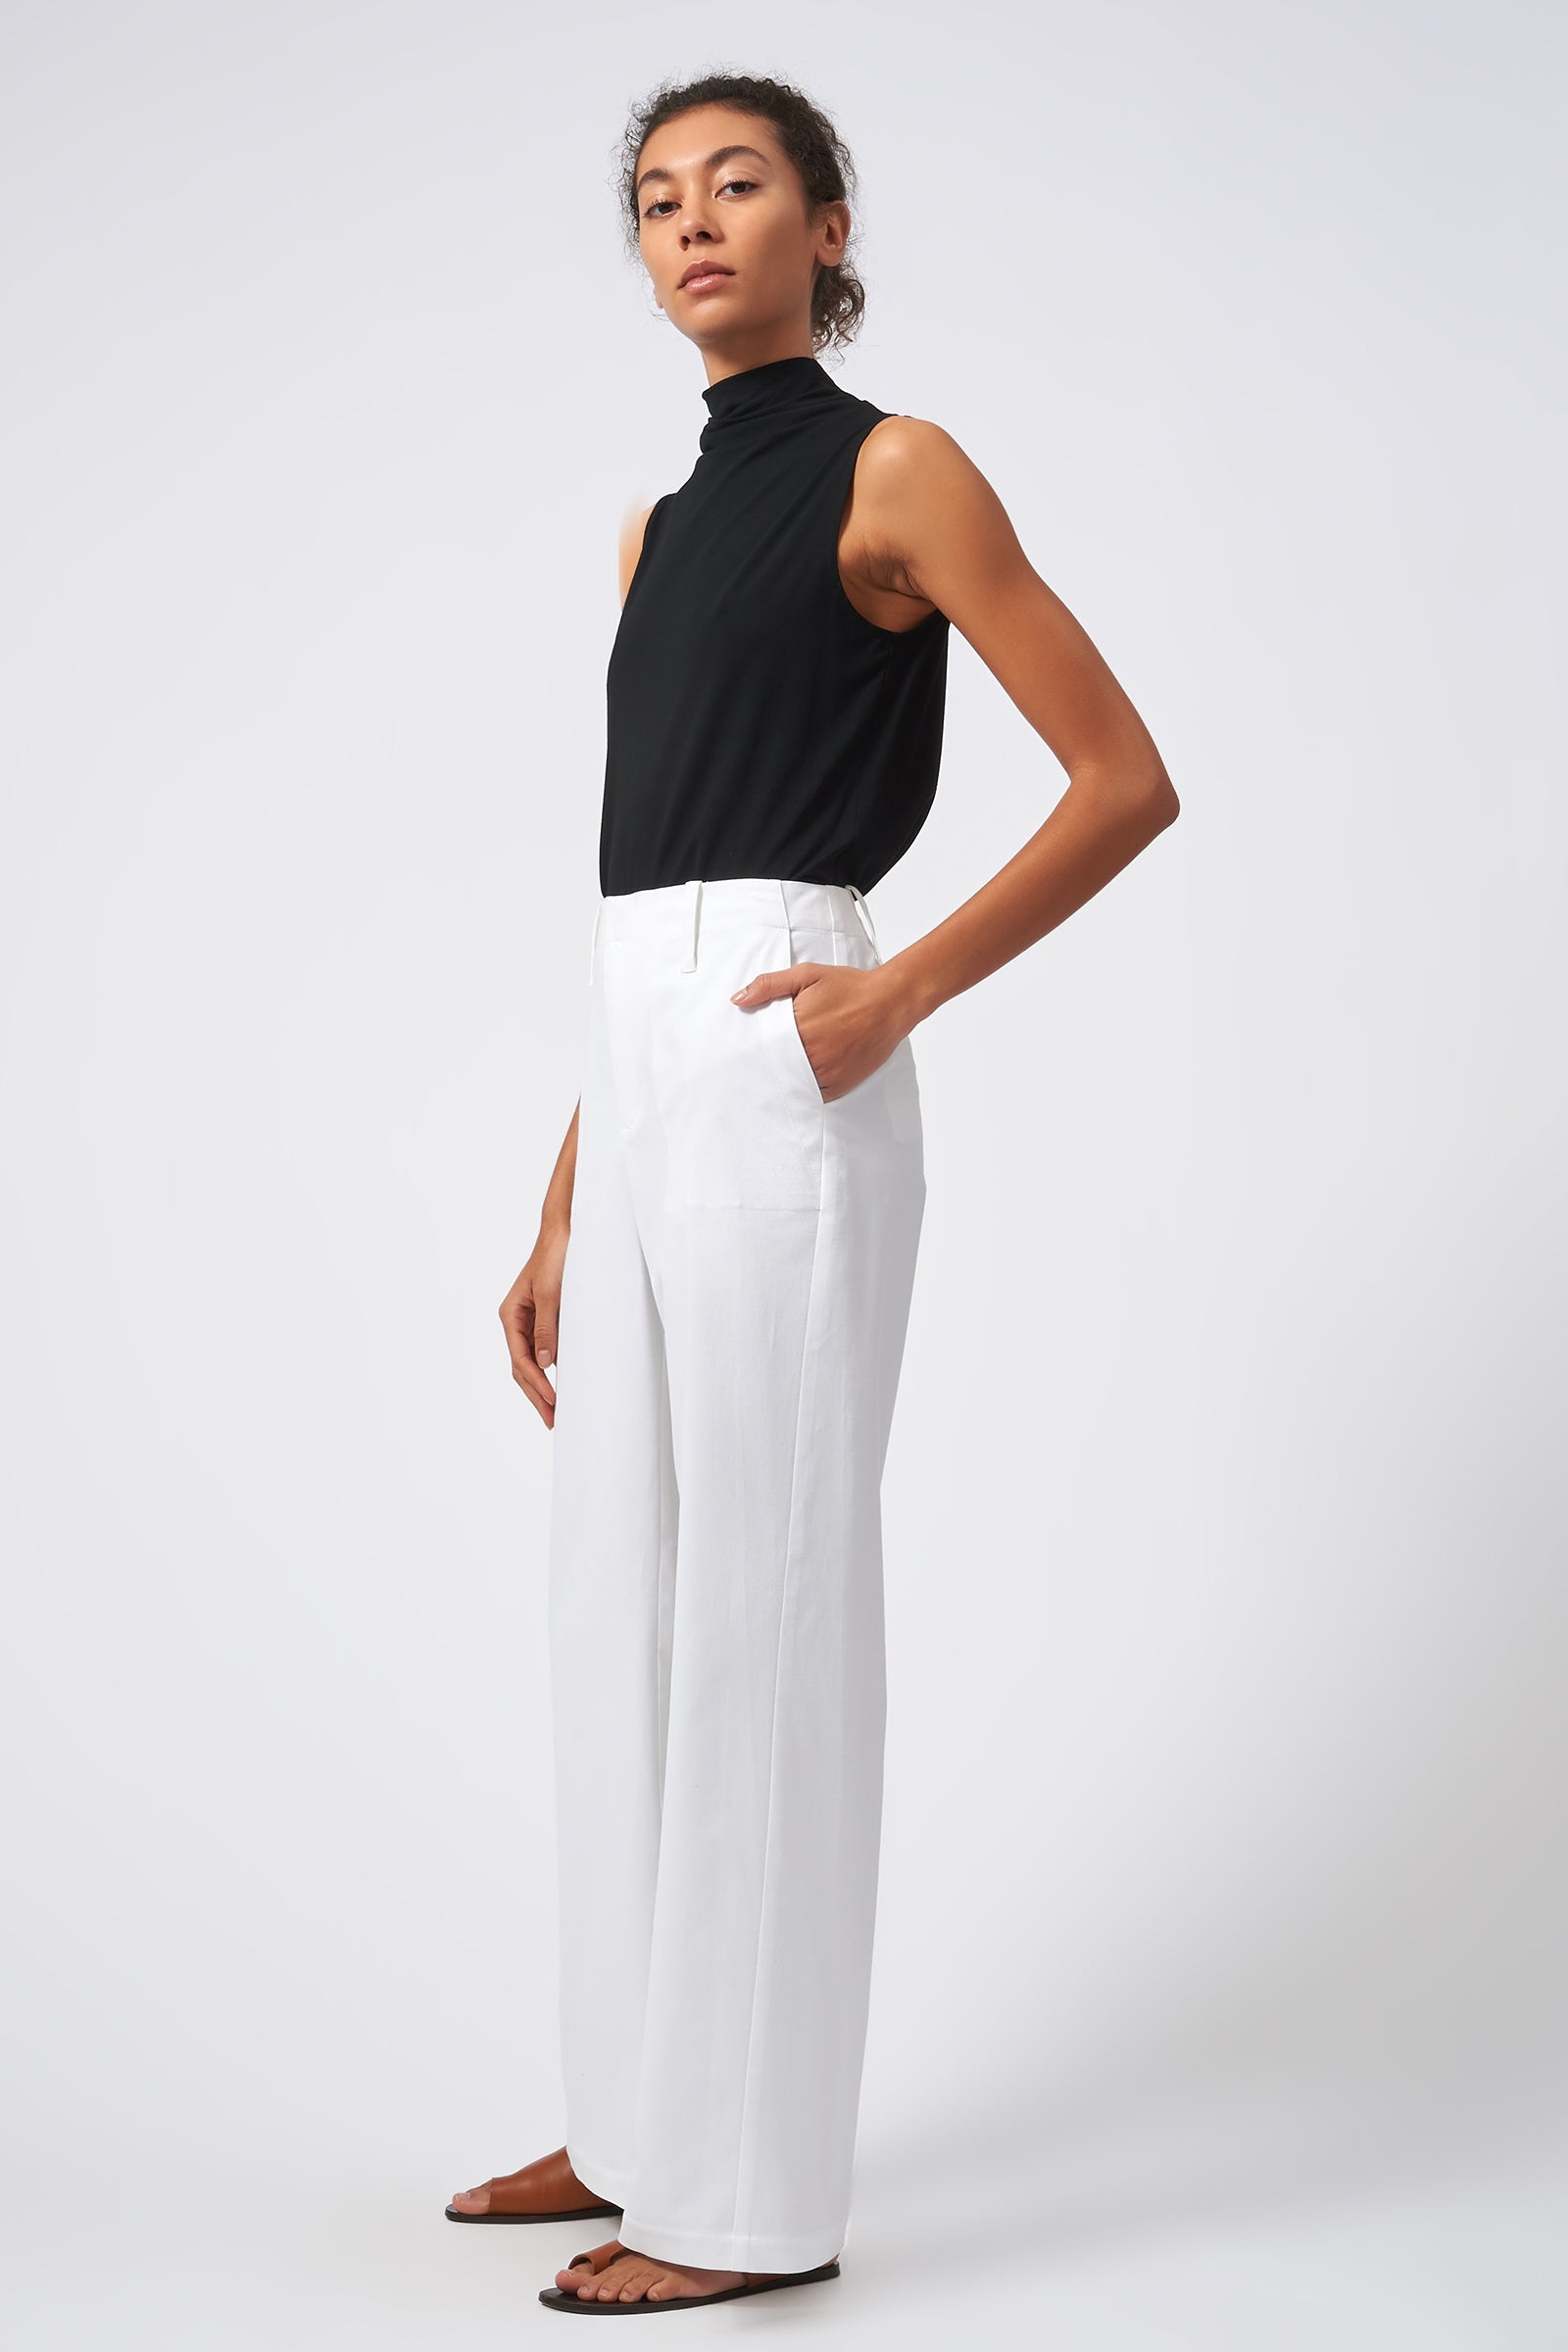 Pipal Regular Fit Women Black, White Trousers - Buy Pipal Regular